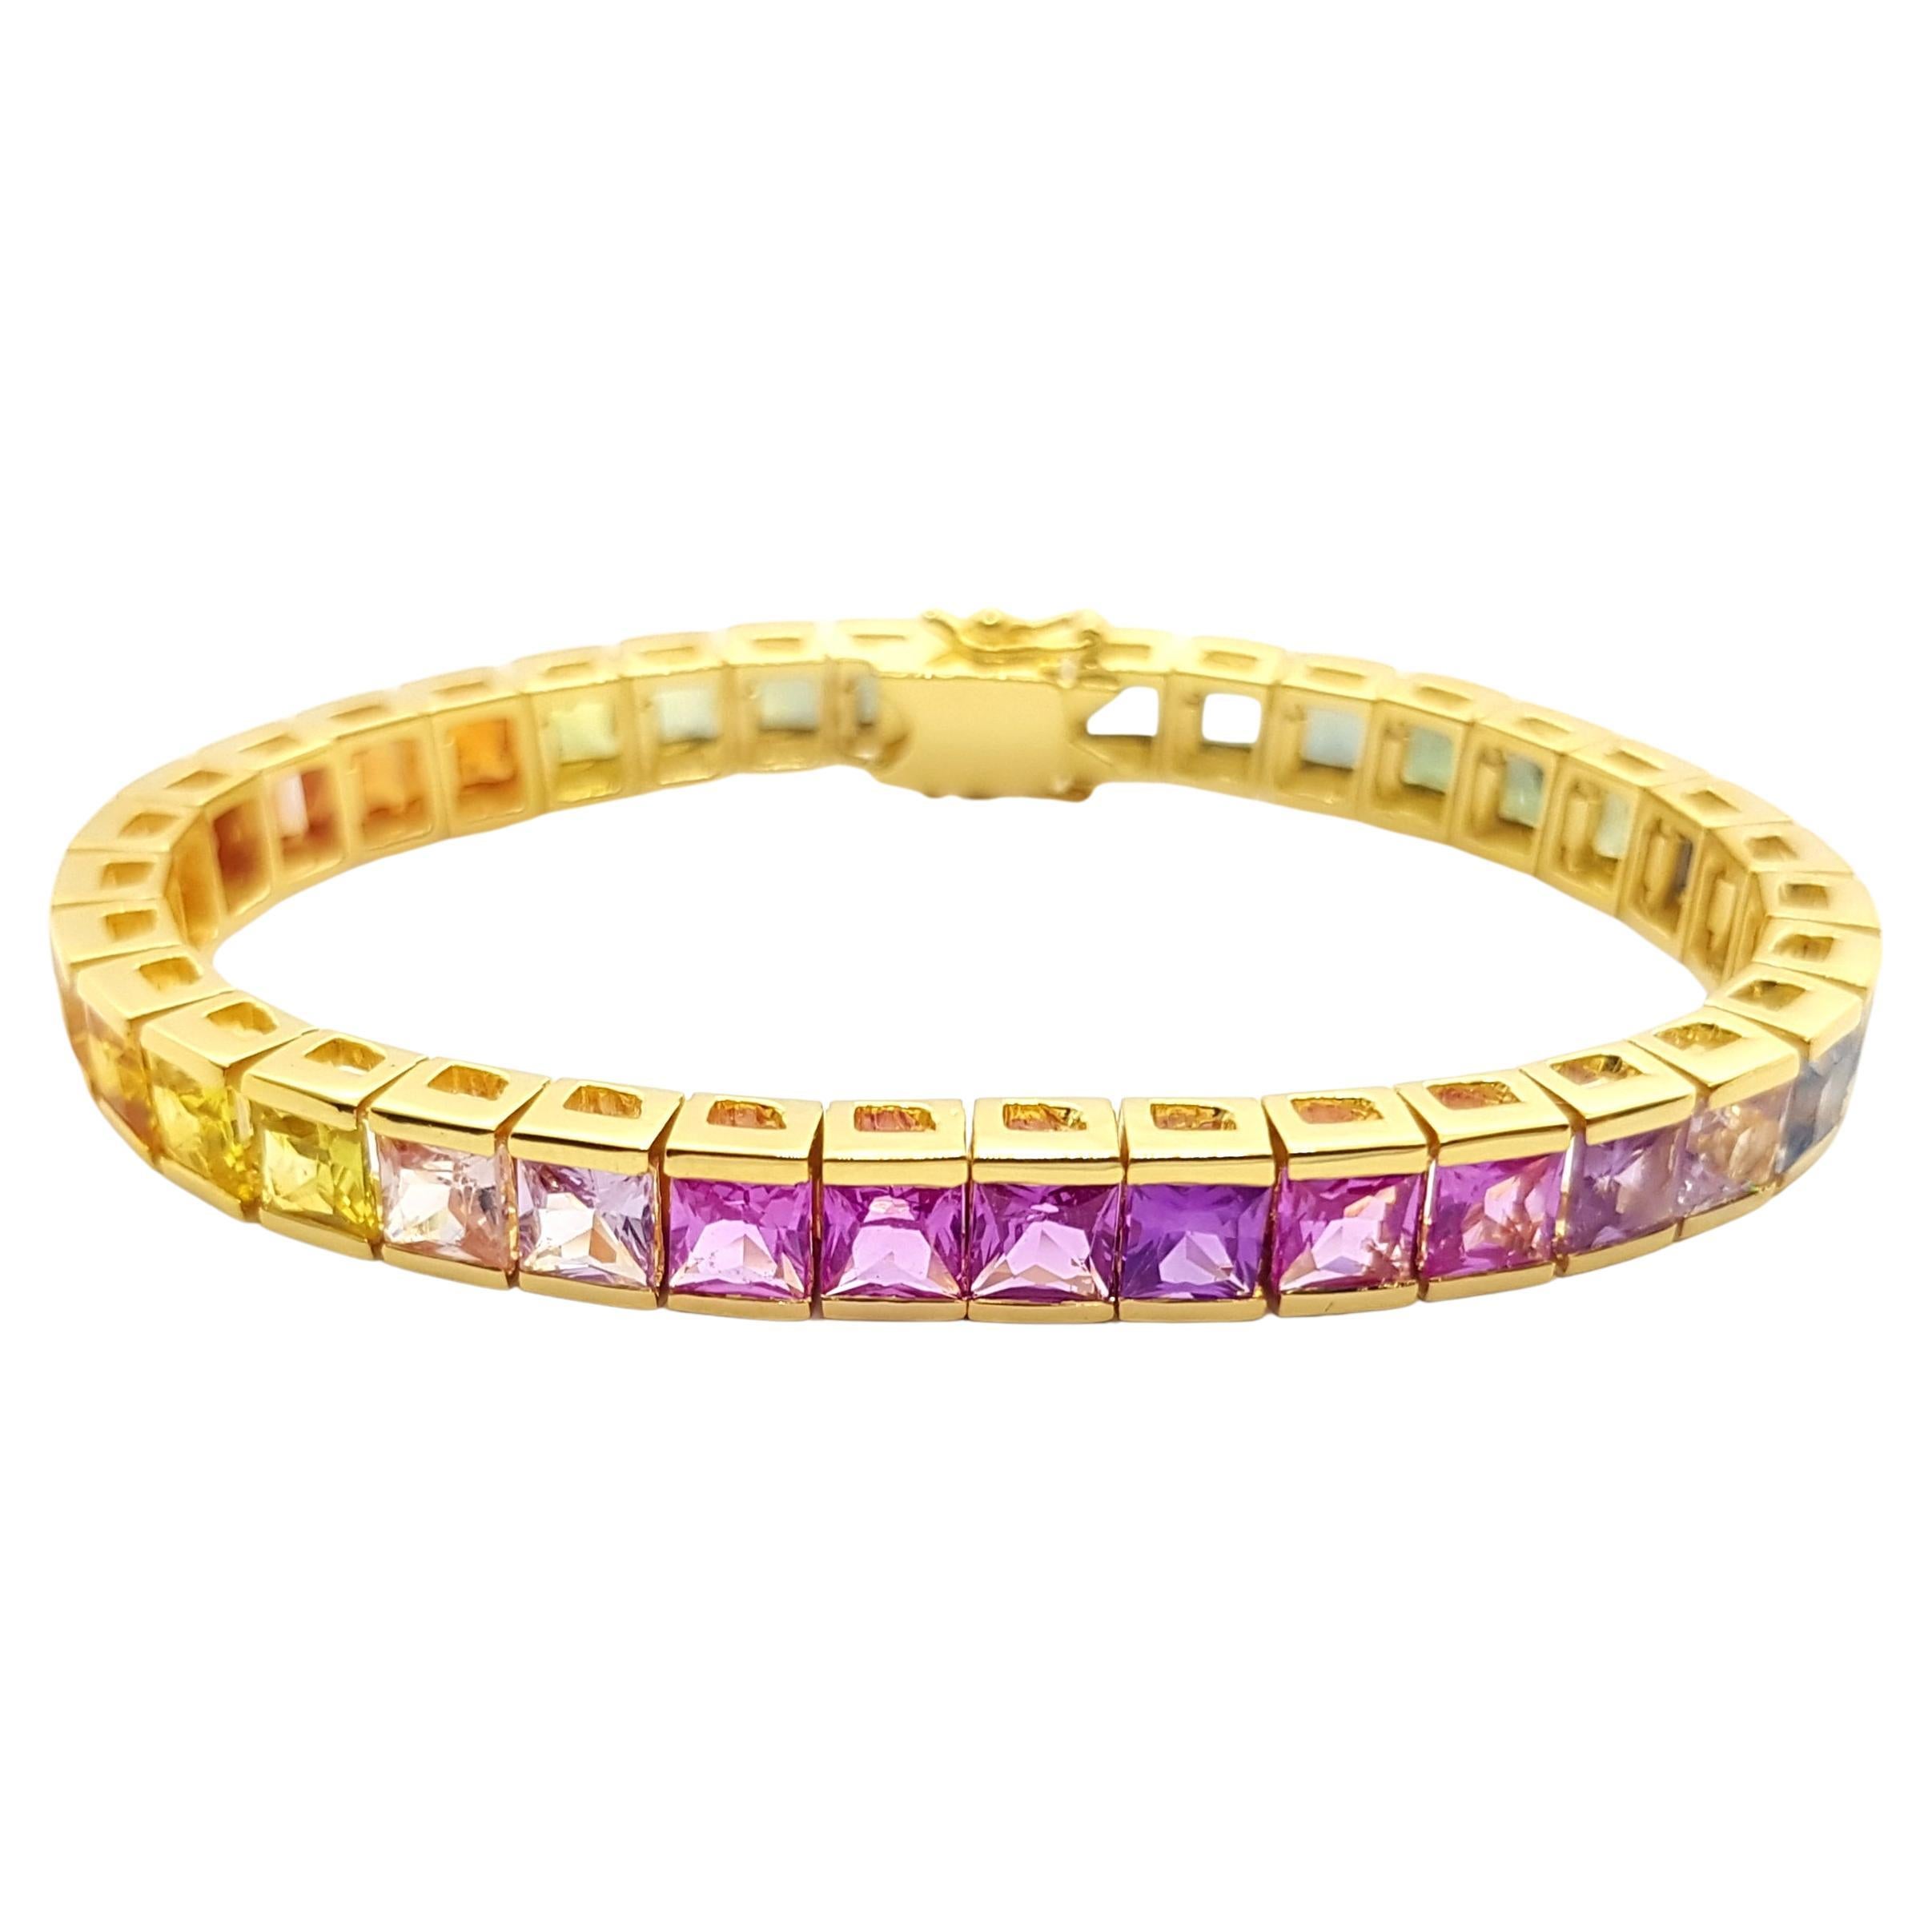 Rainbow Colour Sapphire Tennis Bracelet set in 18K Gold Settings